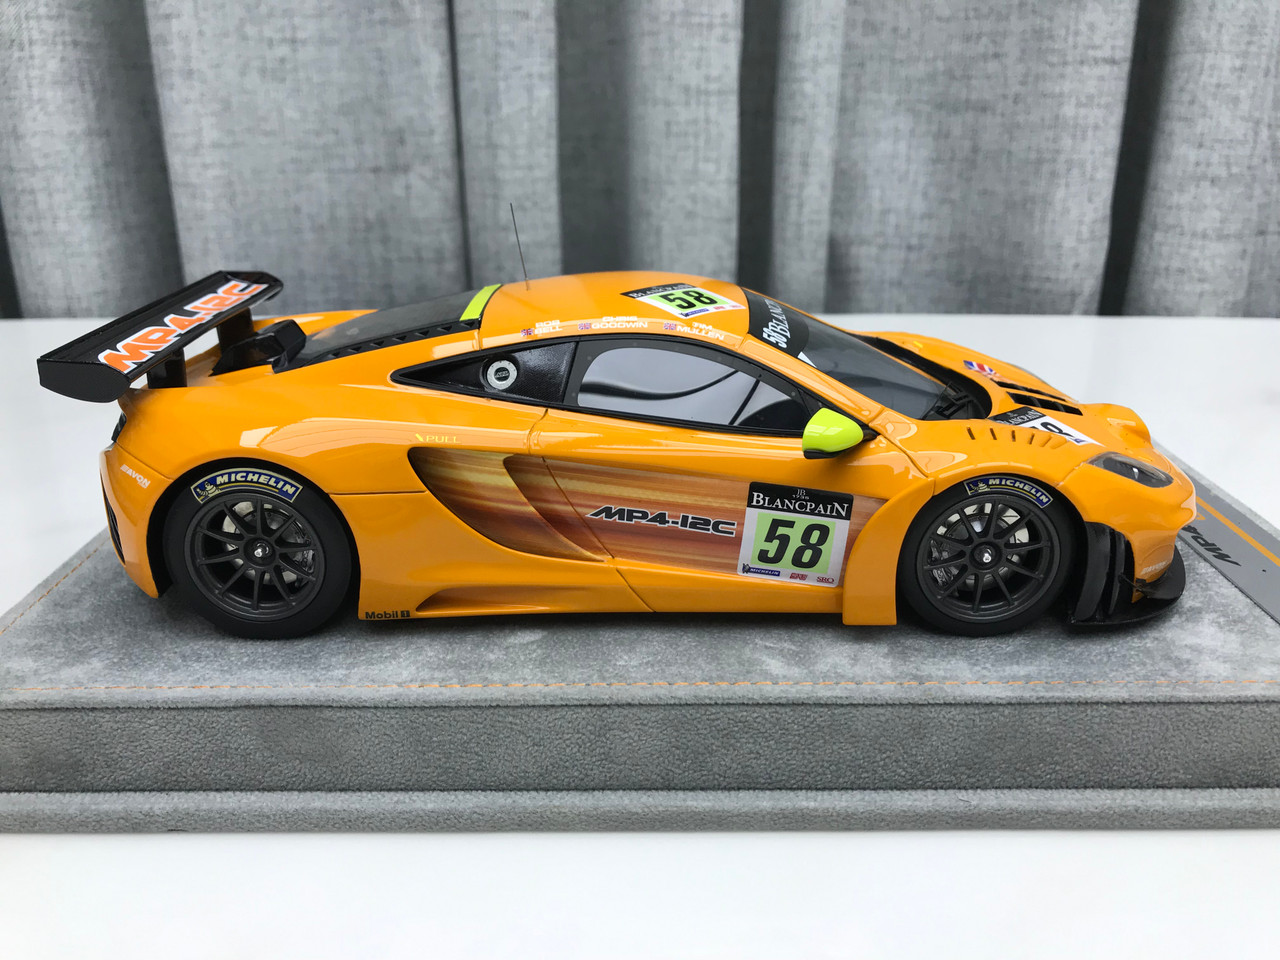 1/18 Tecnomodel McLaren MP4-12C GT3 #58 (Orange) Resin Car Model